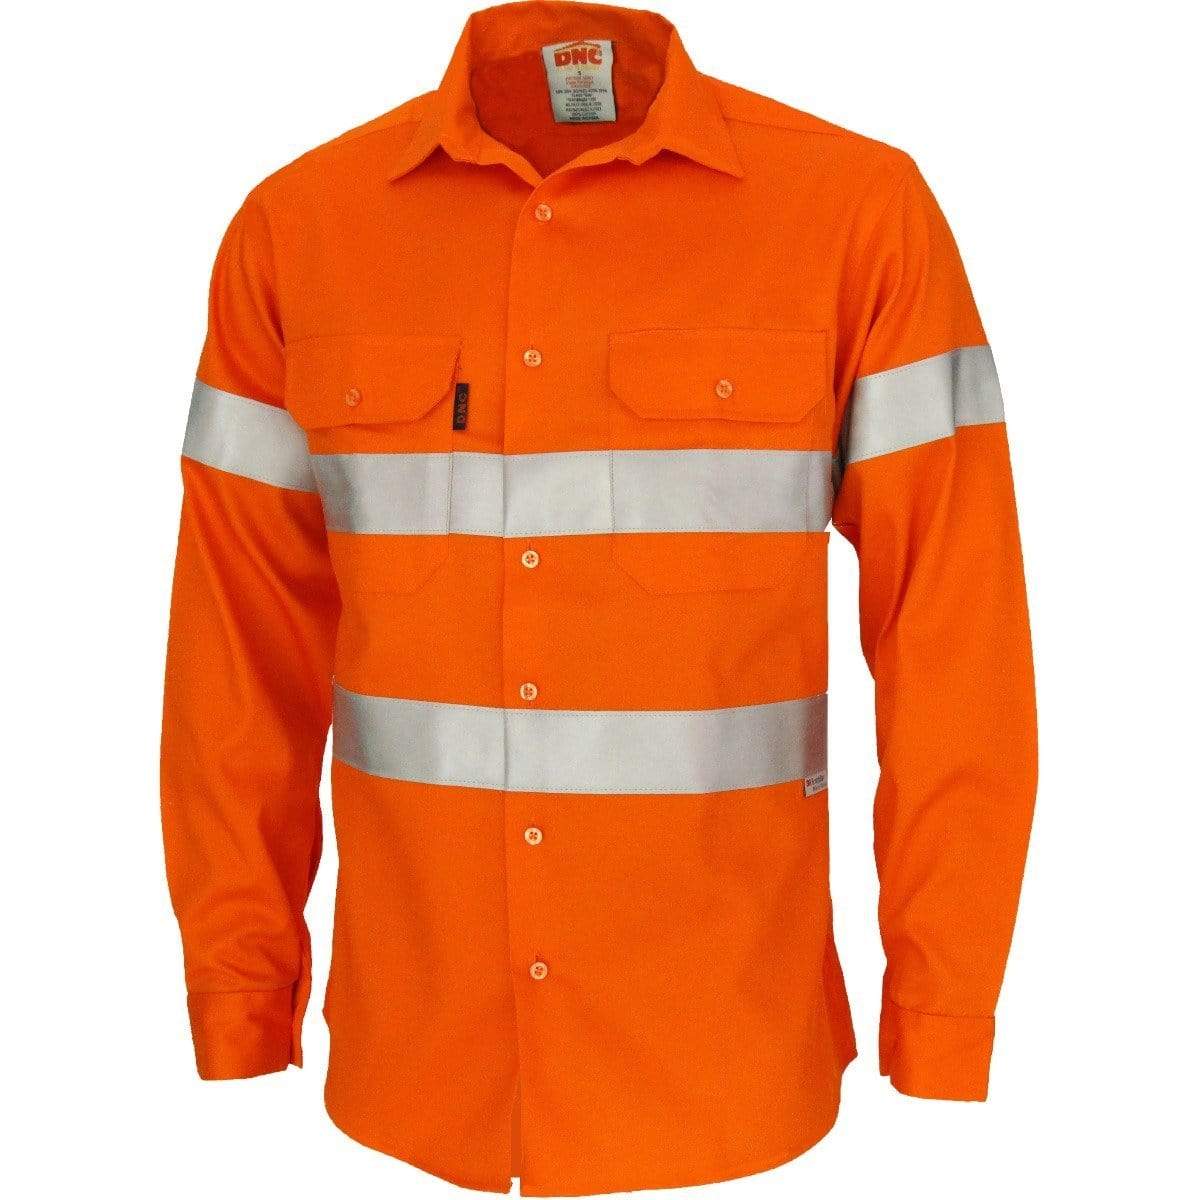 DNC Workwear Work Wear Orange / XS DNC WORKWEAR Patron Saint Flame Retardant ARC Rated Long Sleeve Taped Shirt with 3M FR Tape  3405